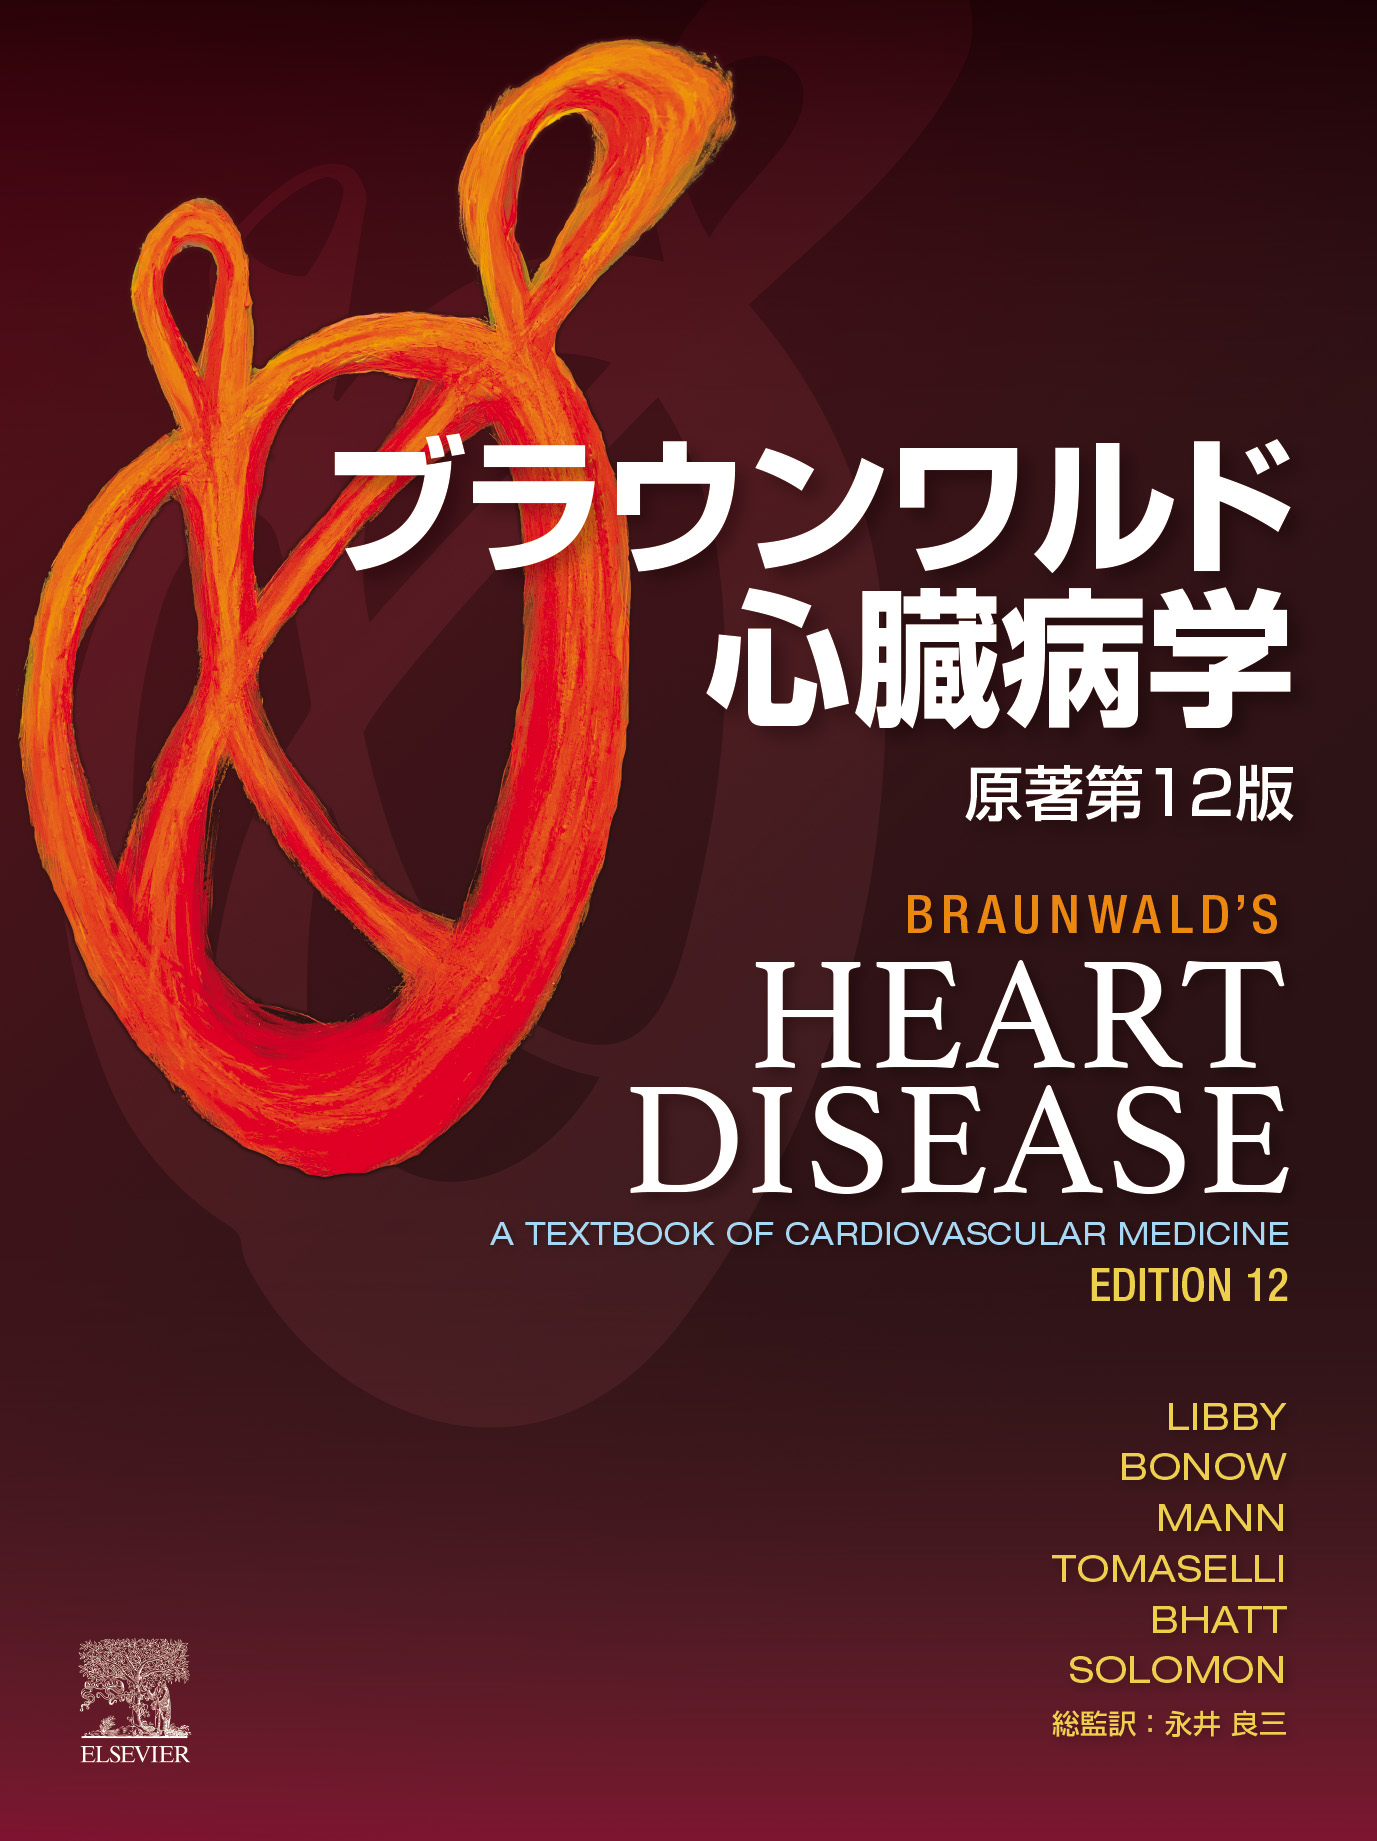 Online eBook Library : Braunwald's Heart Disease,12th ed.